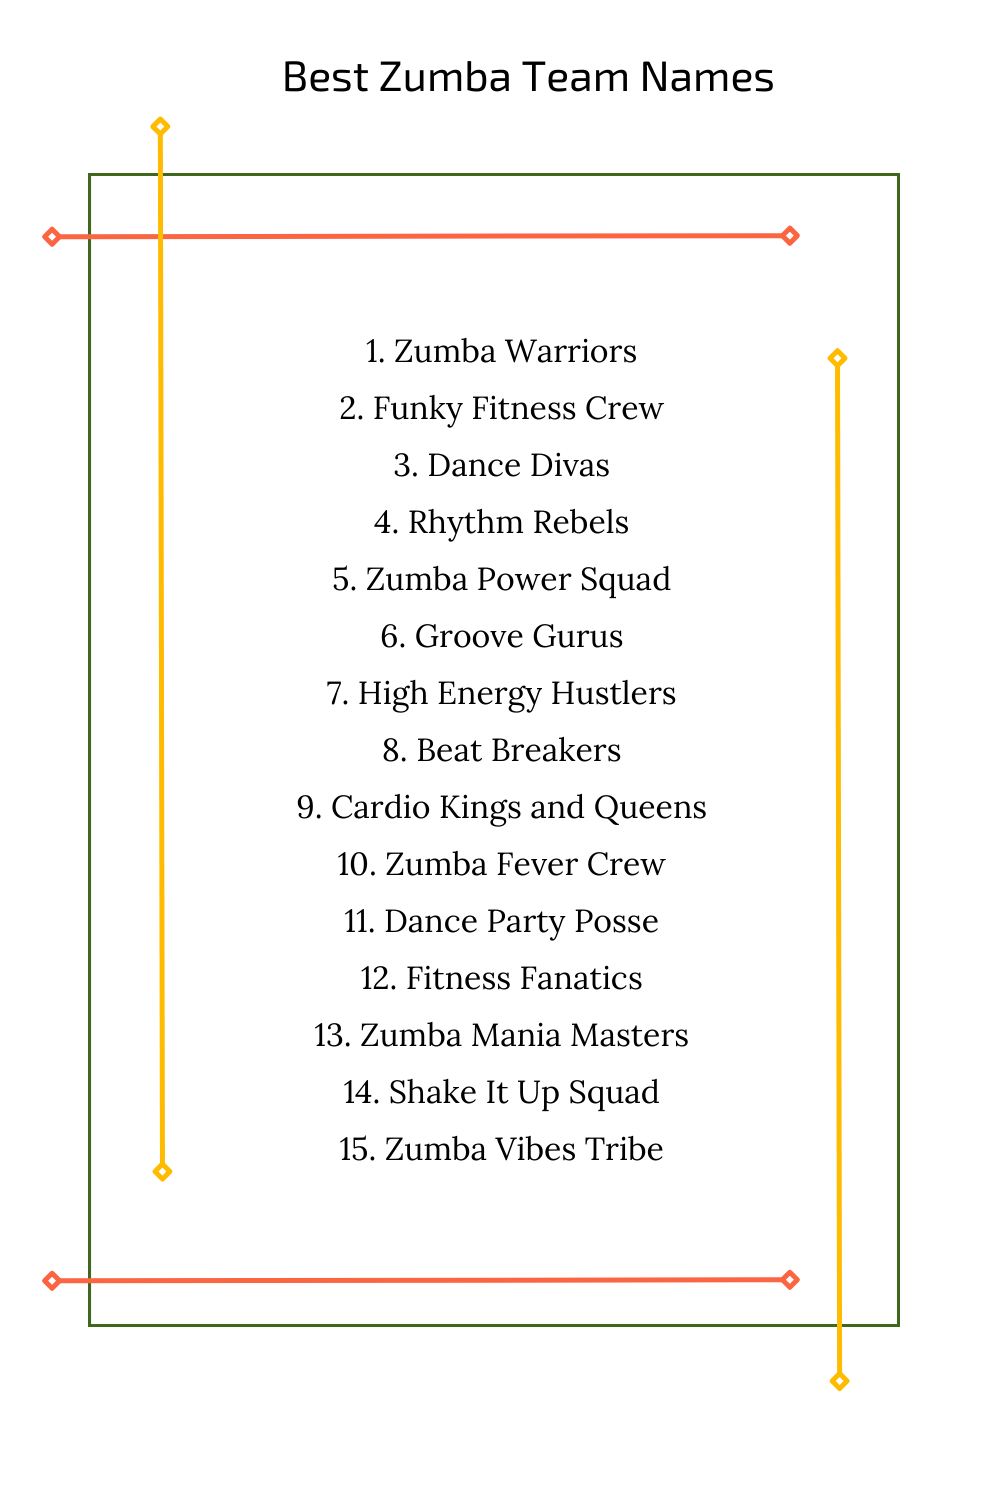 Best Zumba Team Names